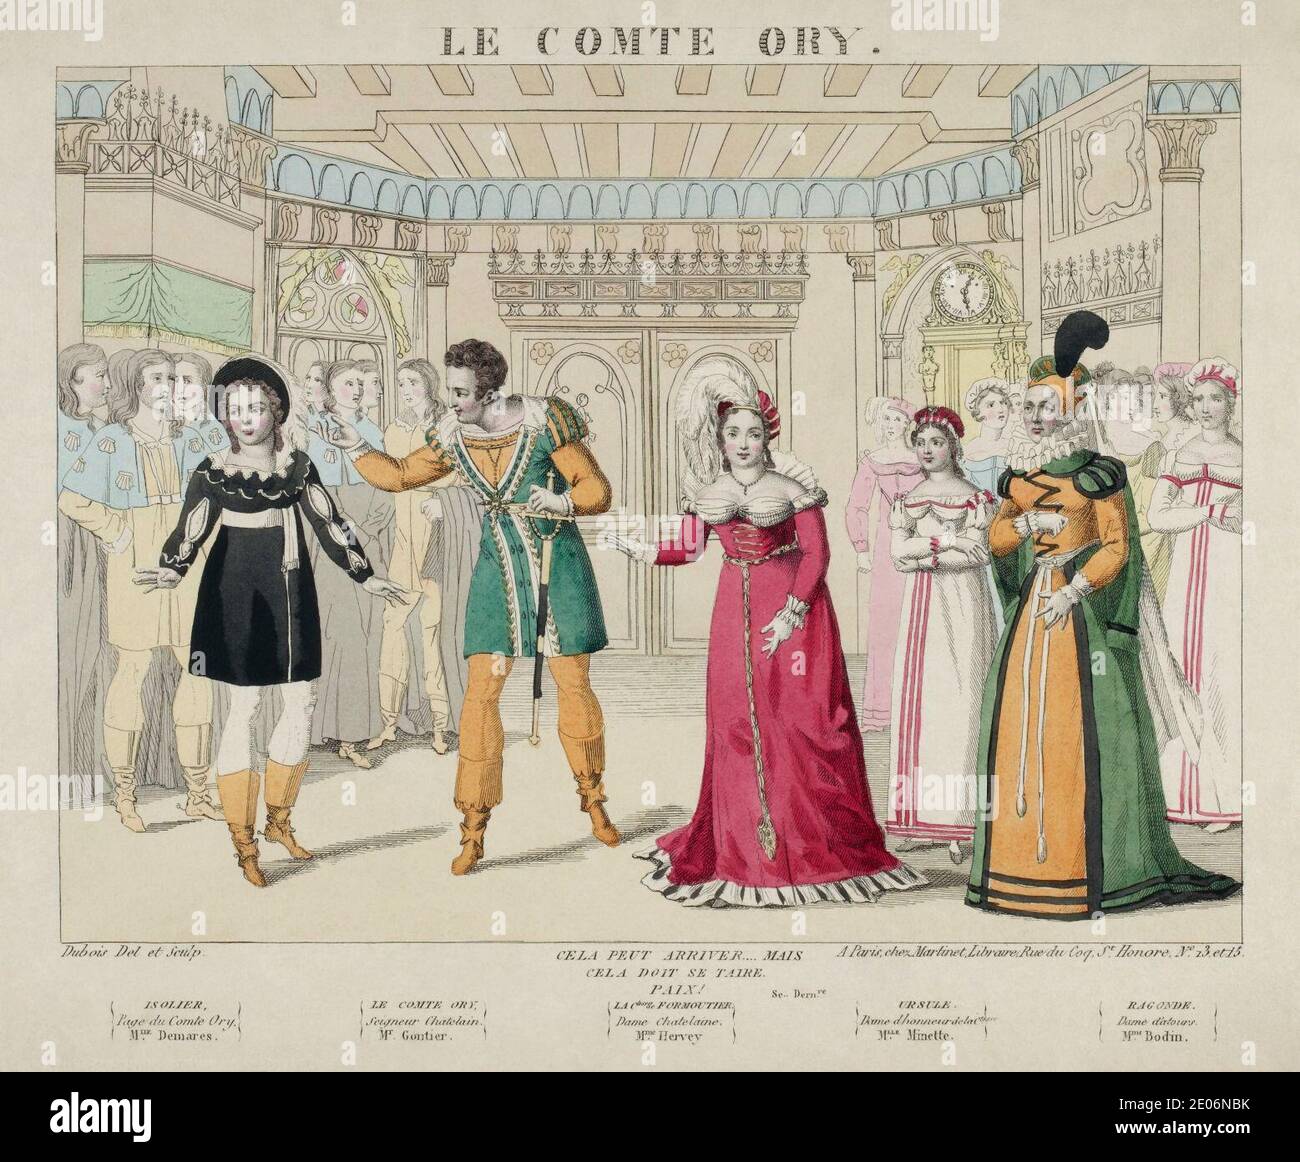 Le comte Ory - Dubois & chez Martinet - Final scene. Stock Photo